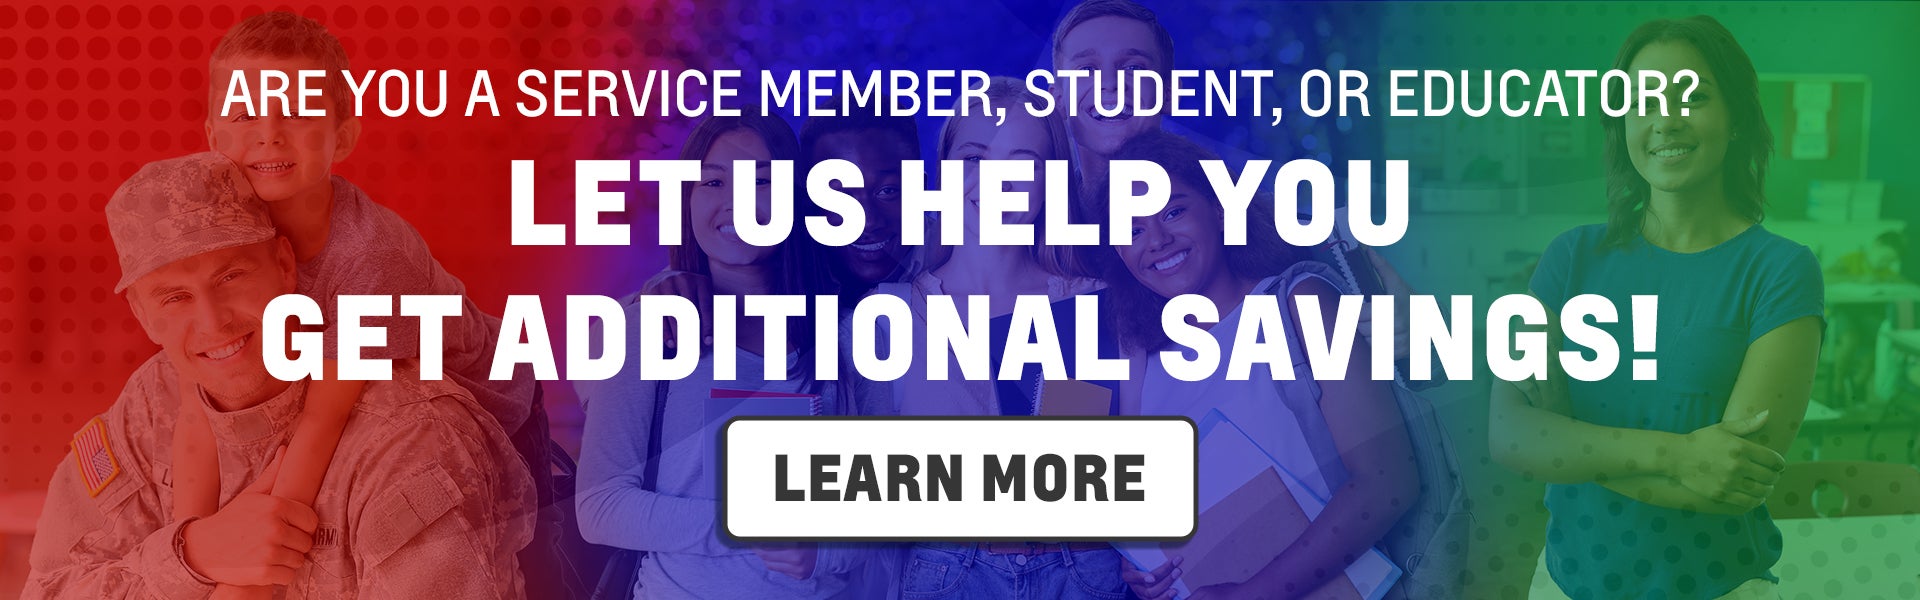 Savings For Service Members, Students, and Educators